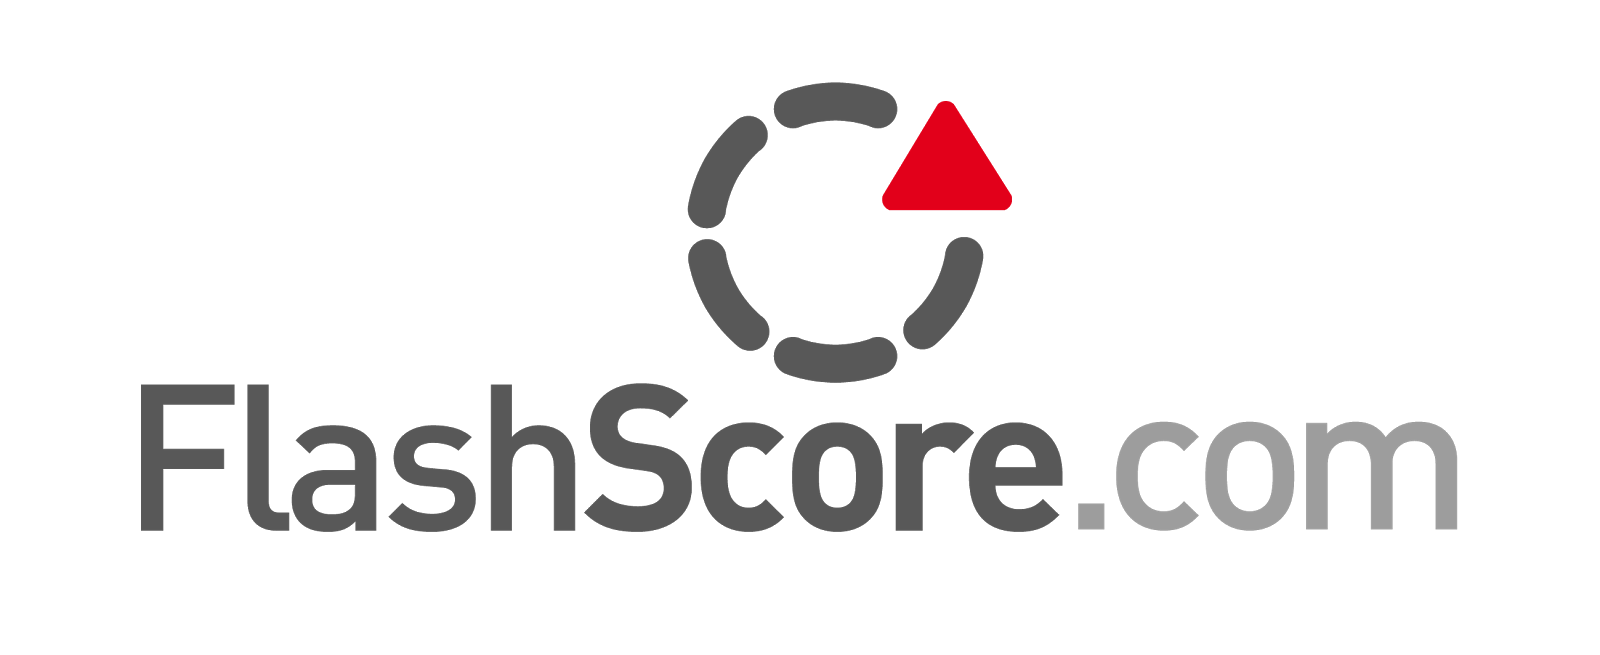 Flashscore com на русском. FLASHSCORE. FLASHSCORE фото. FLASHSCORE logo. Ярлык FLASHSCORE.